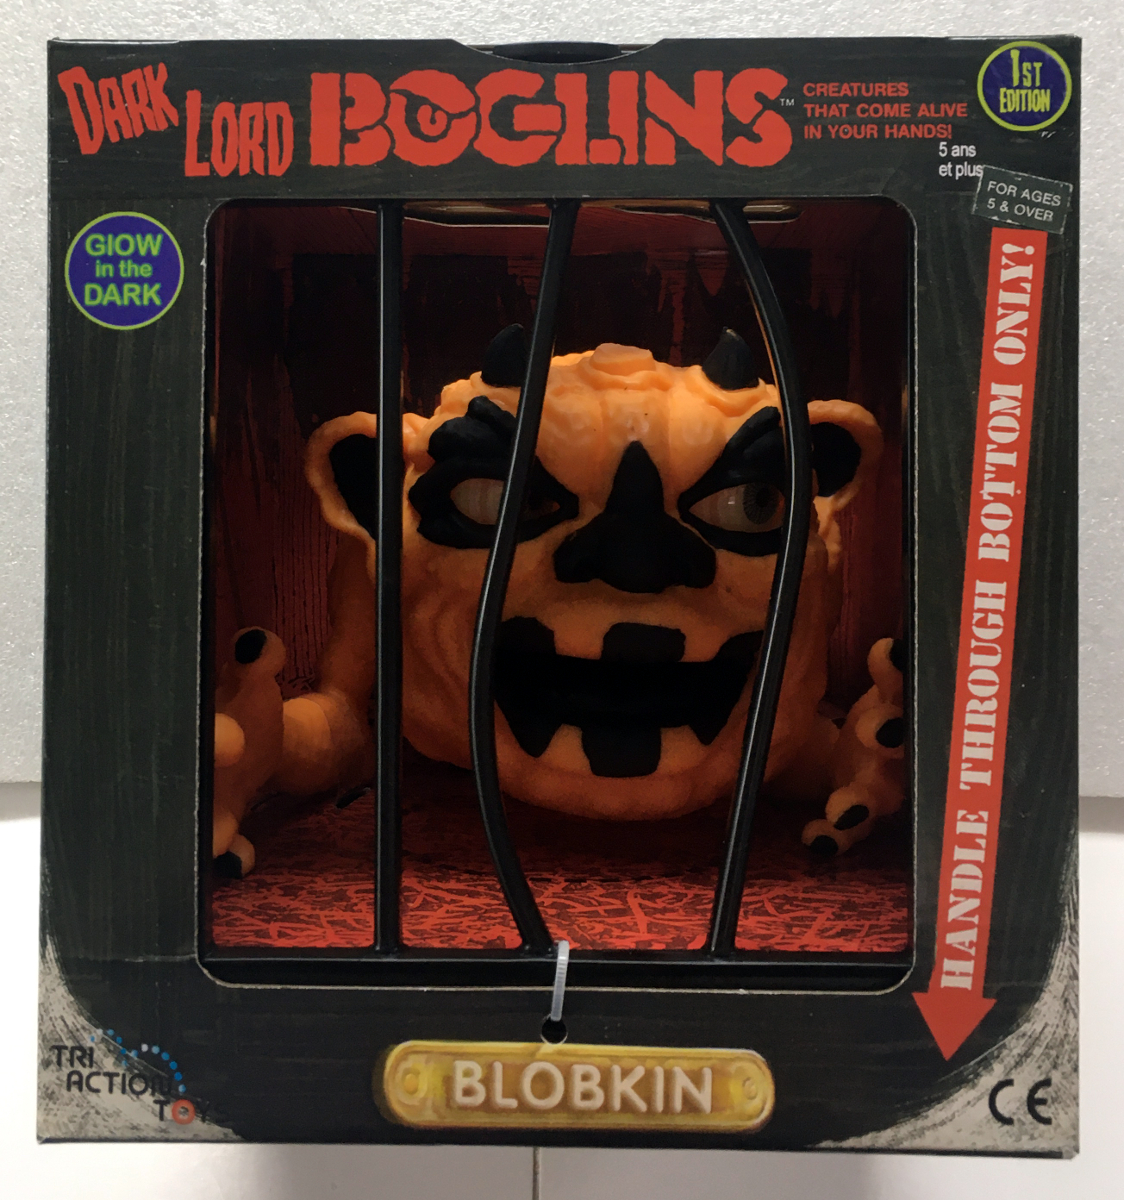 MIB Tri Action Toys First Edition Dark Lords Boglins Blobkin Puppet: Mint in Box 1